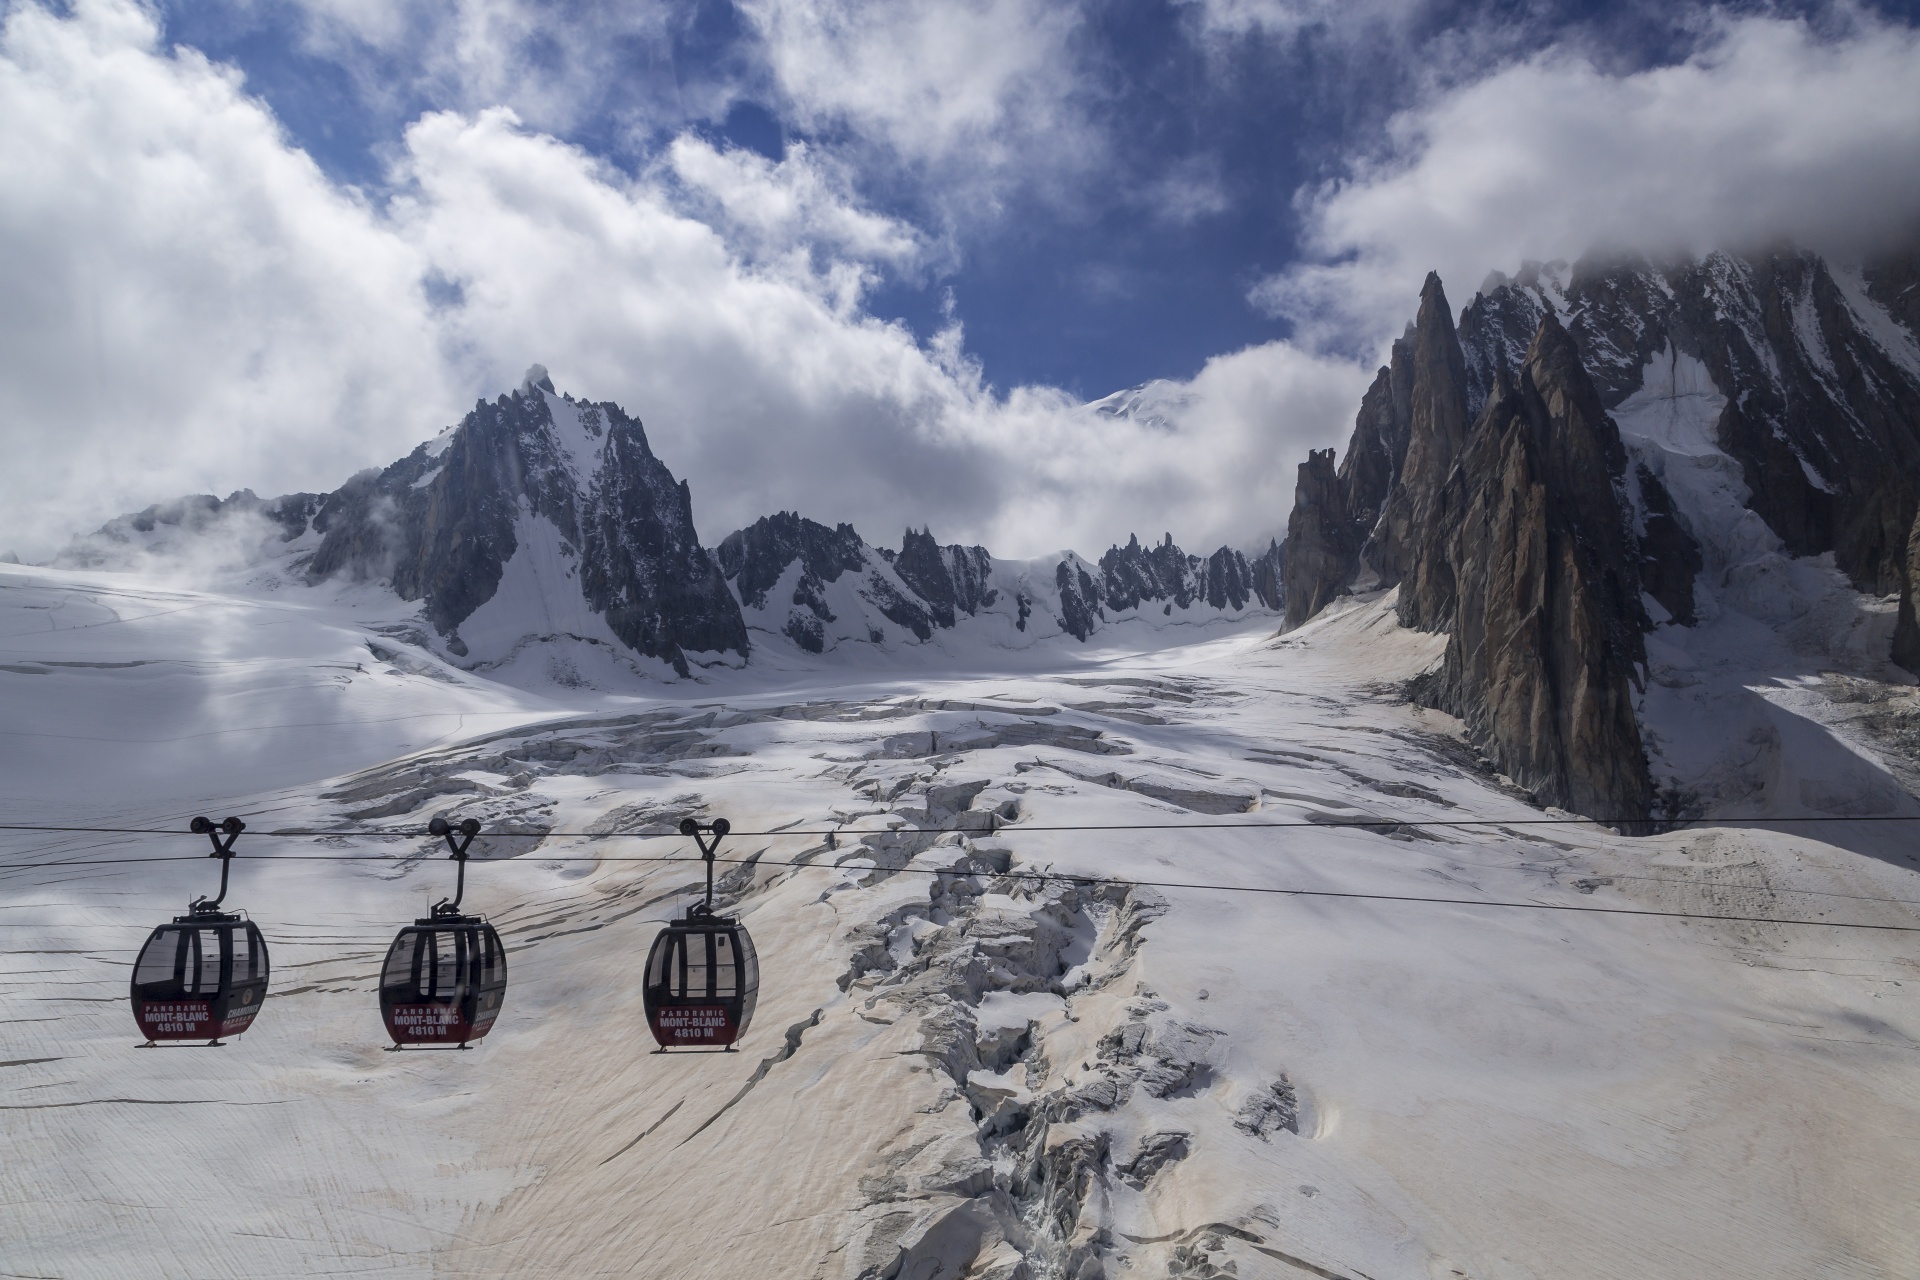 Hellbronner-Aiguille du Midi gondola passing above the Glacier du Geant in the Chamonix ski area